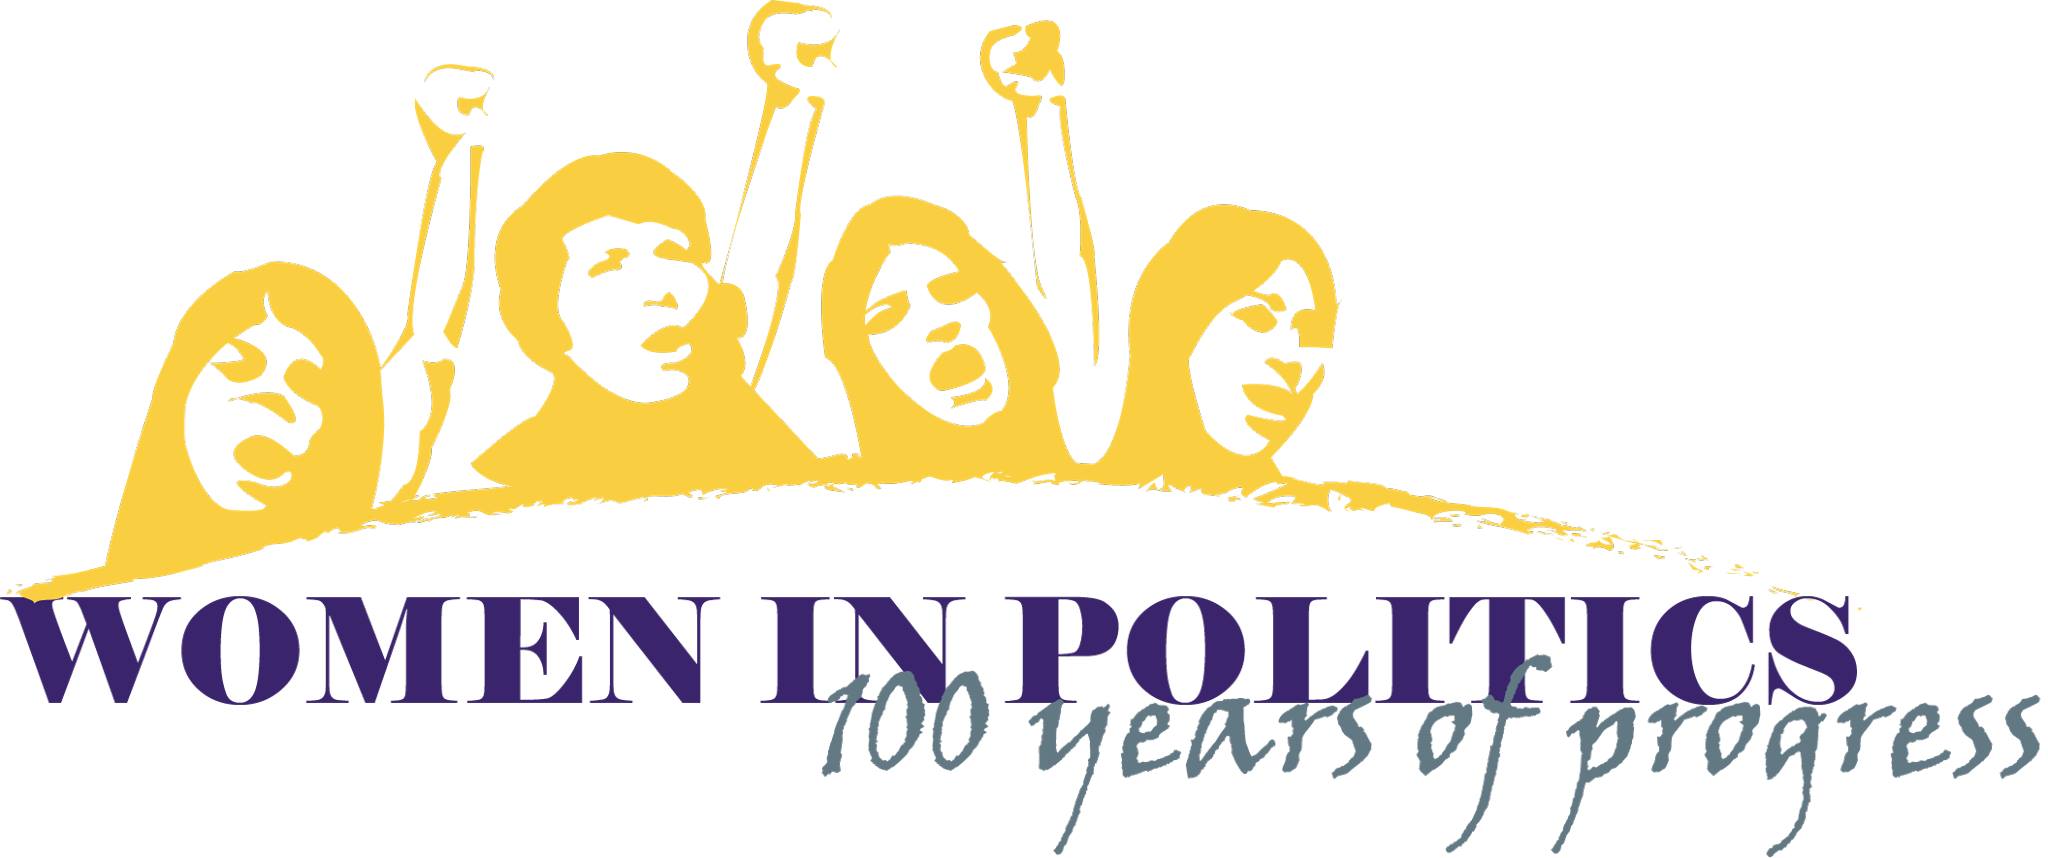 Women in Politics: 100 Years of Progress